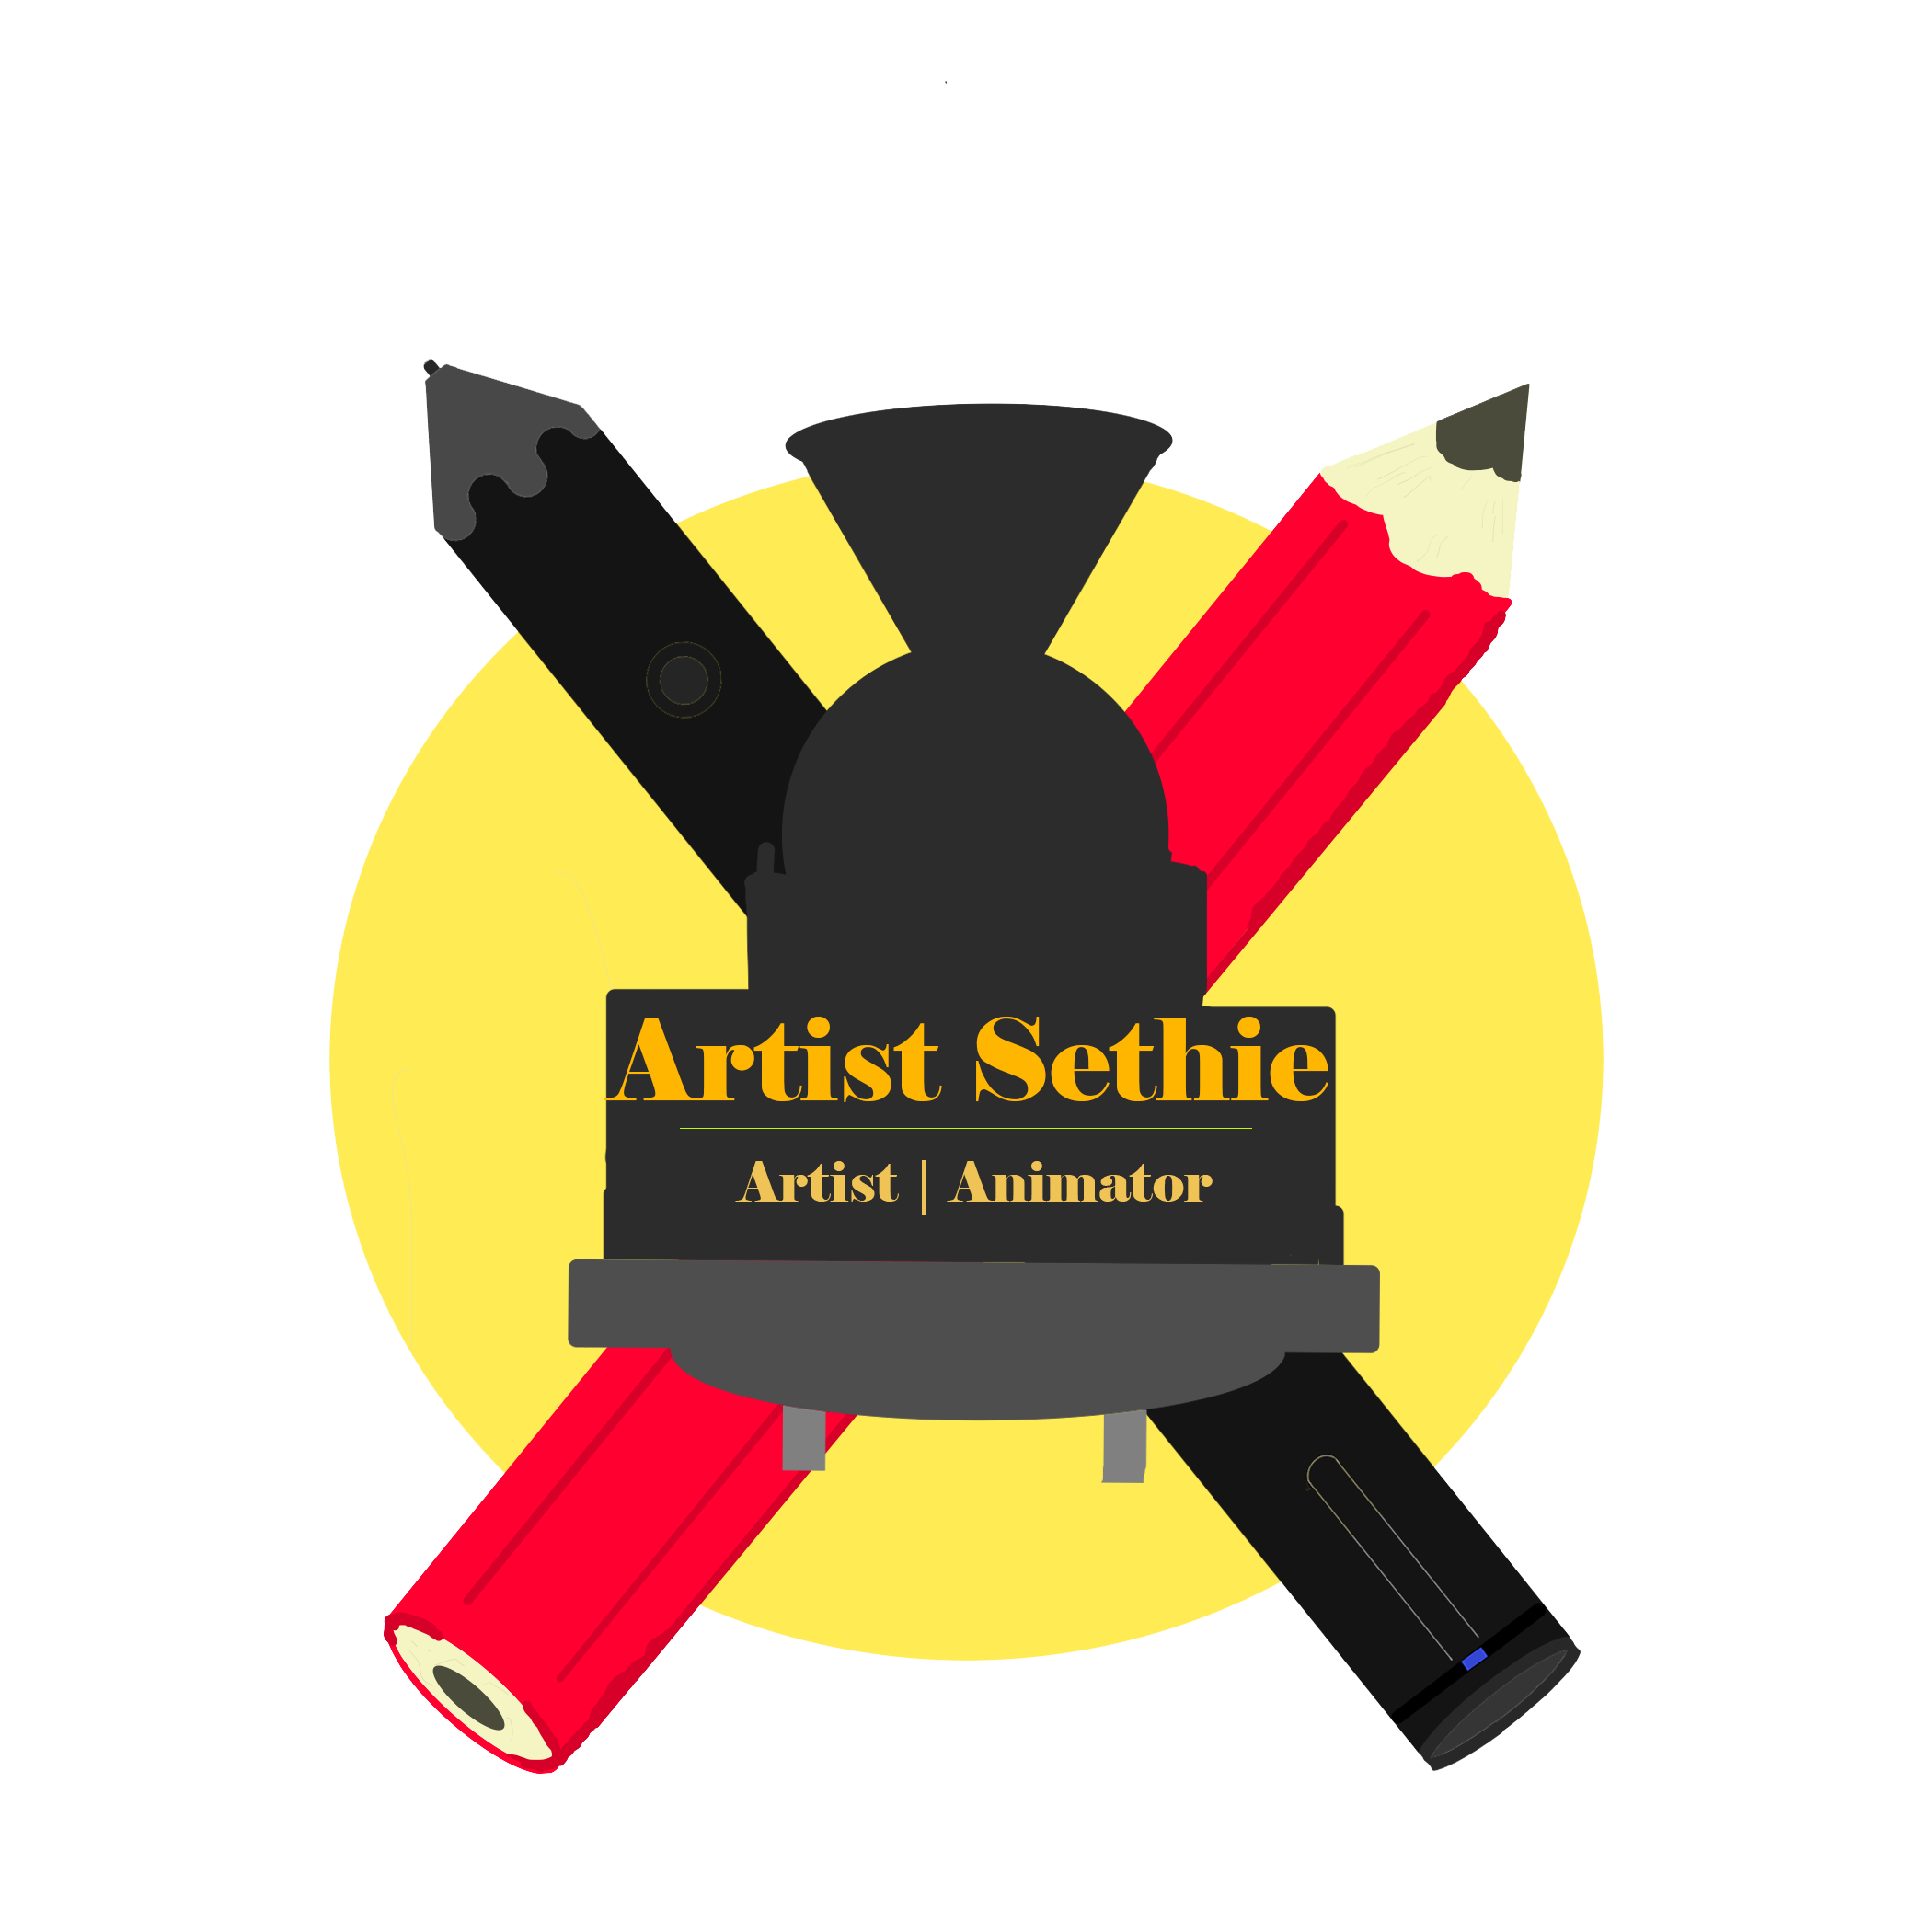 Artist sethie's logo